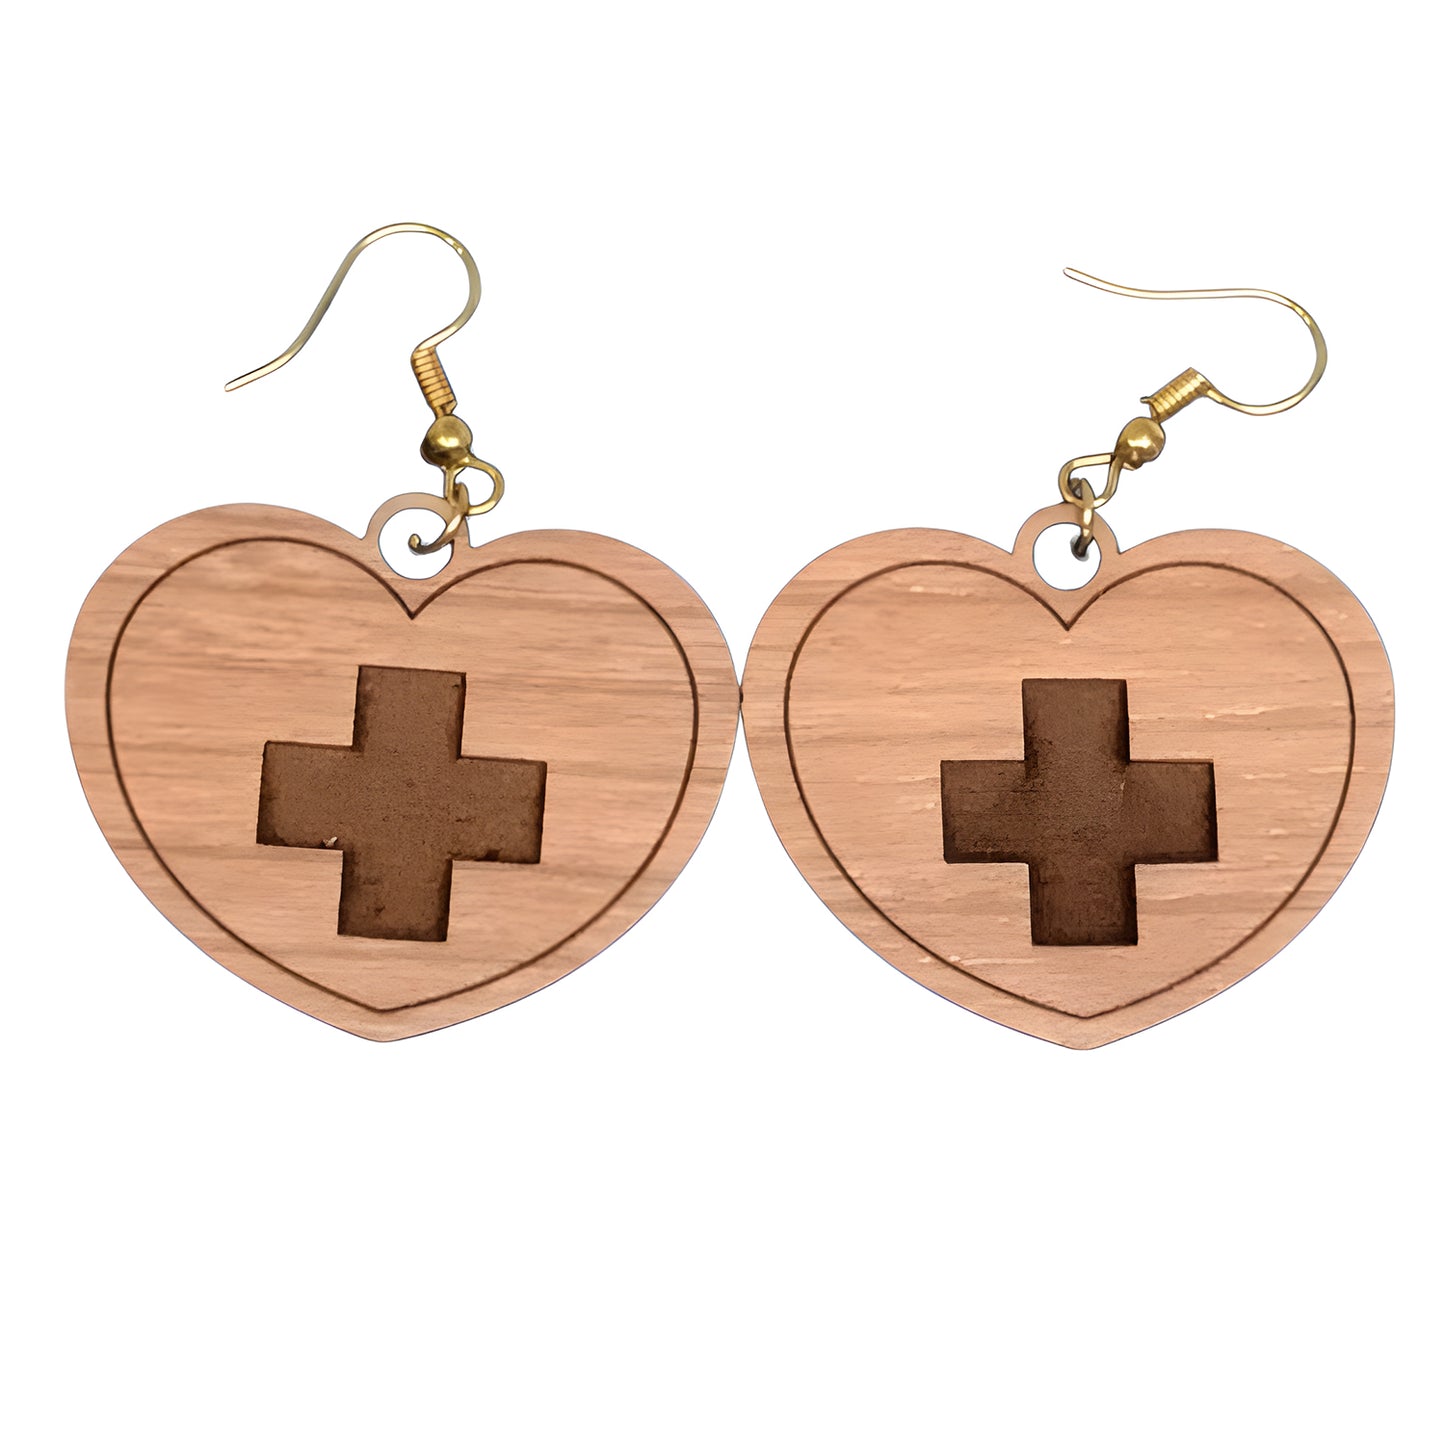 Nurse / Doctor / Medical Heart Earrings